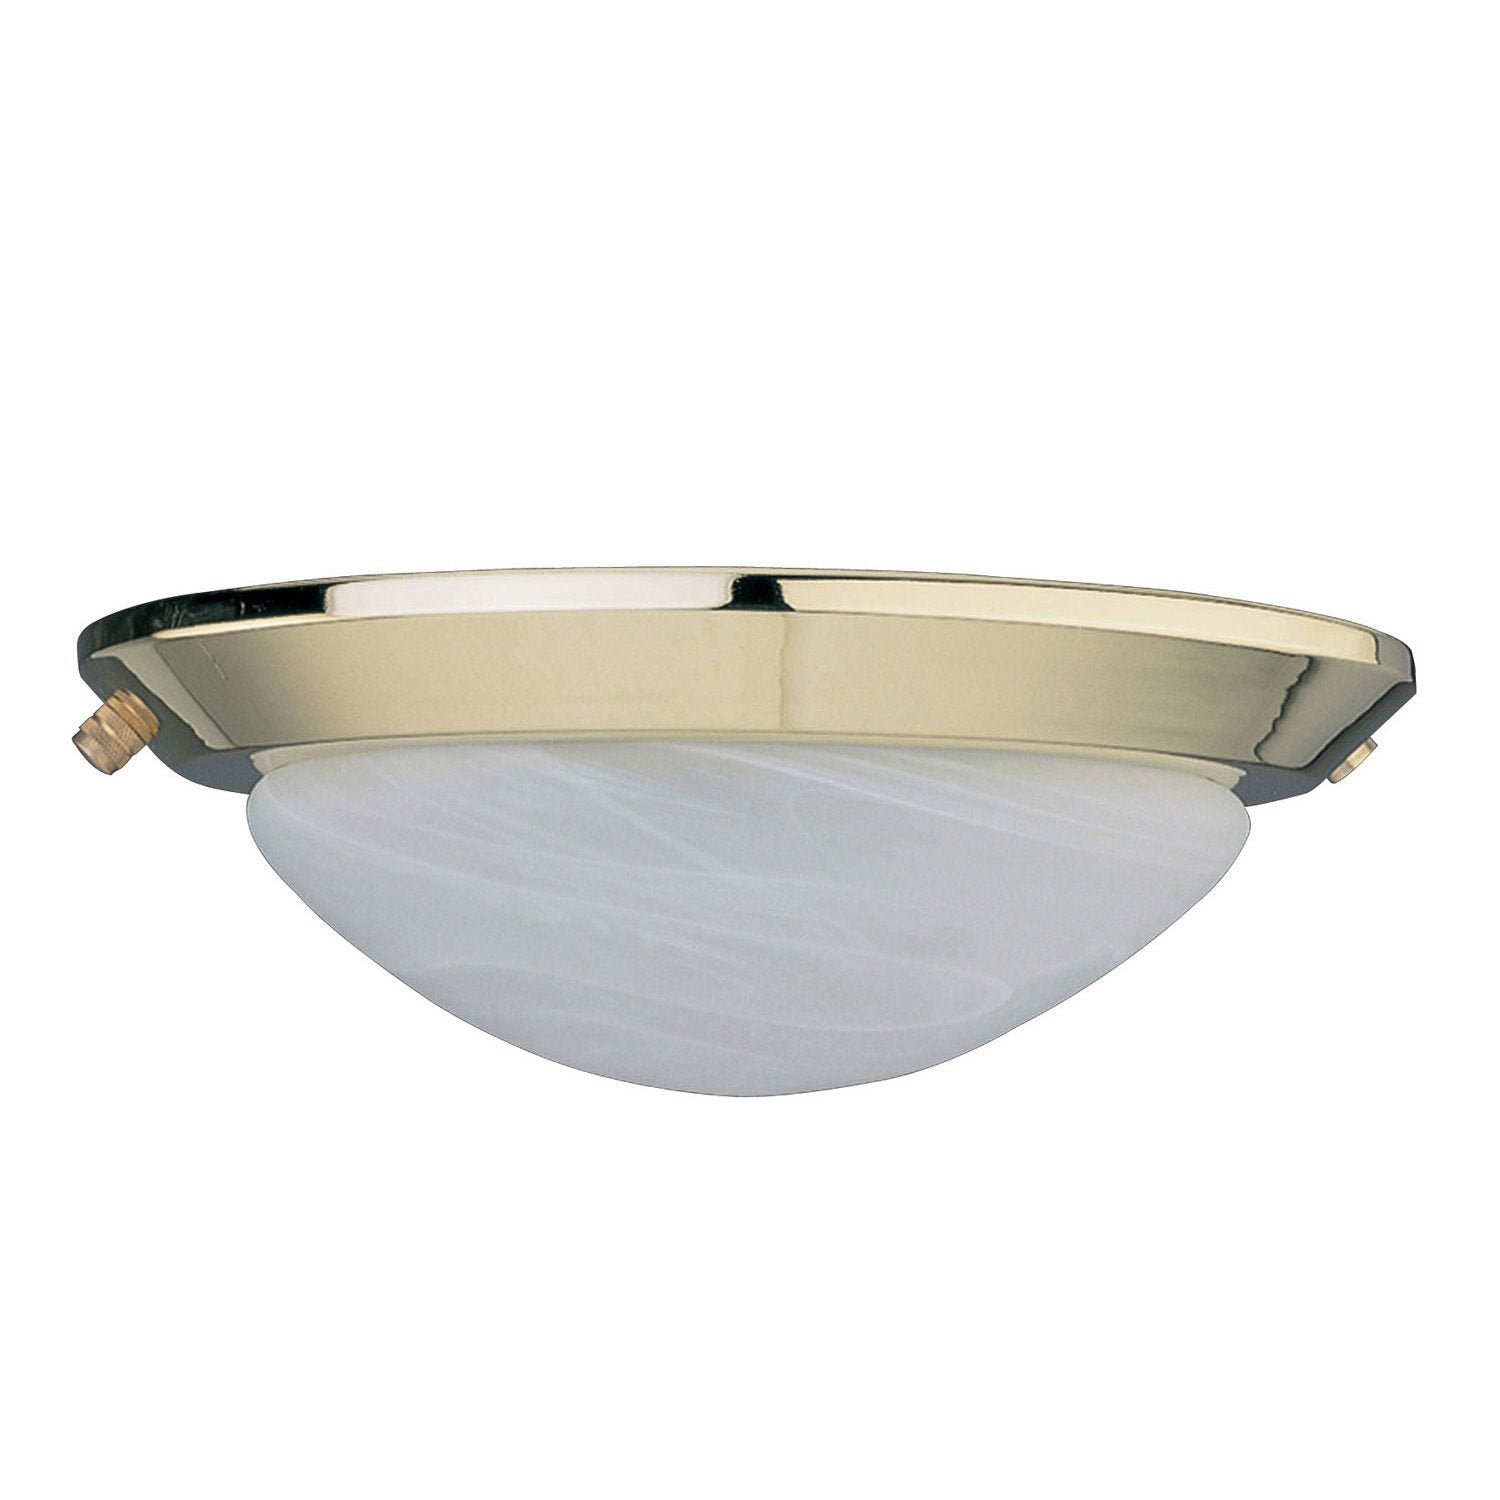 Concord Fans 2 Light Polished Brass Finish Low Profile Ceiling Fan Light Kit